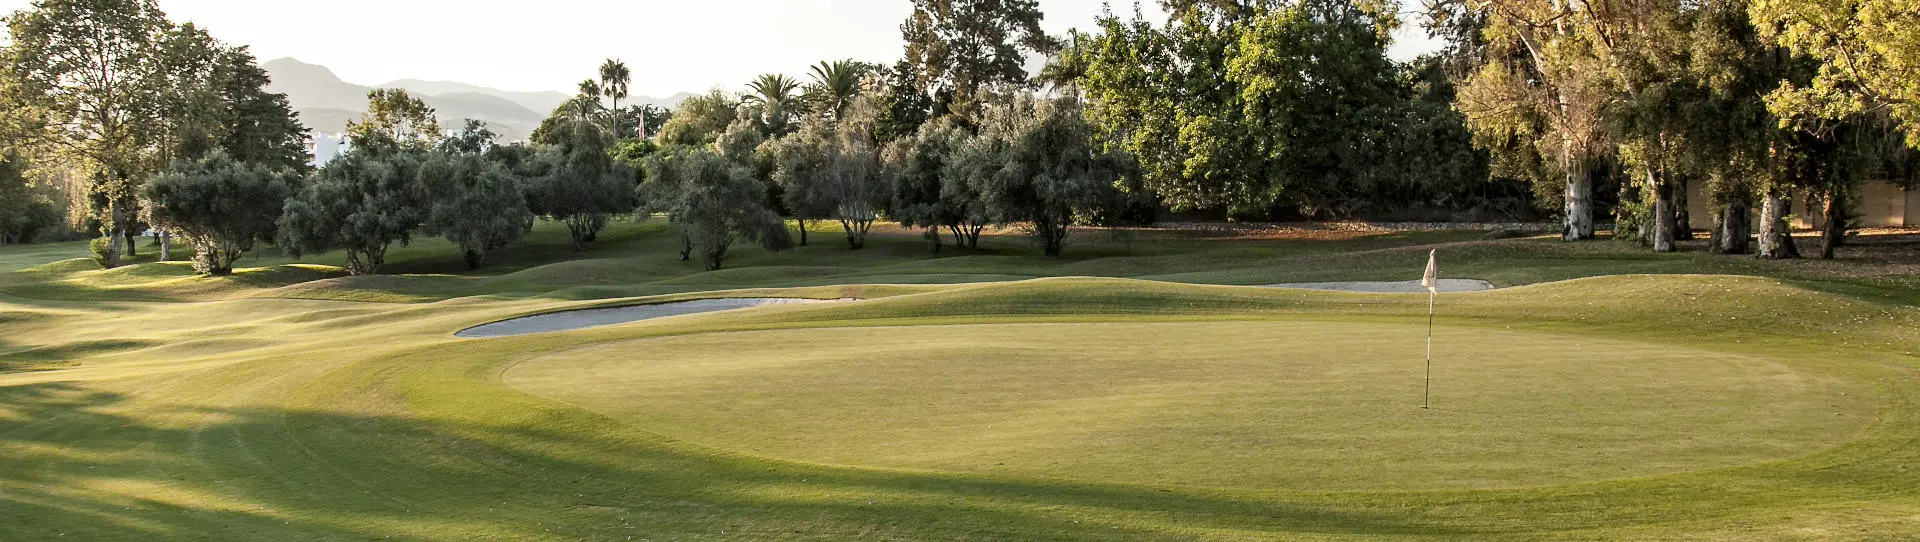 Spain golf courses - Guadalmina North Golf - Photo 1